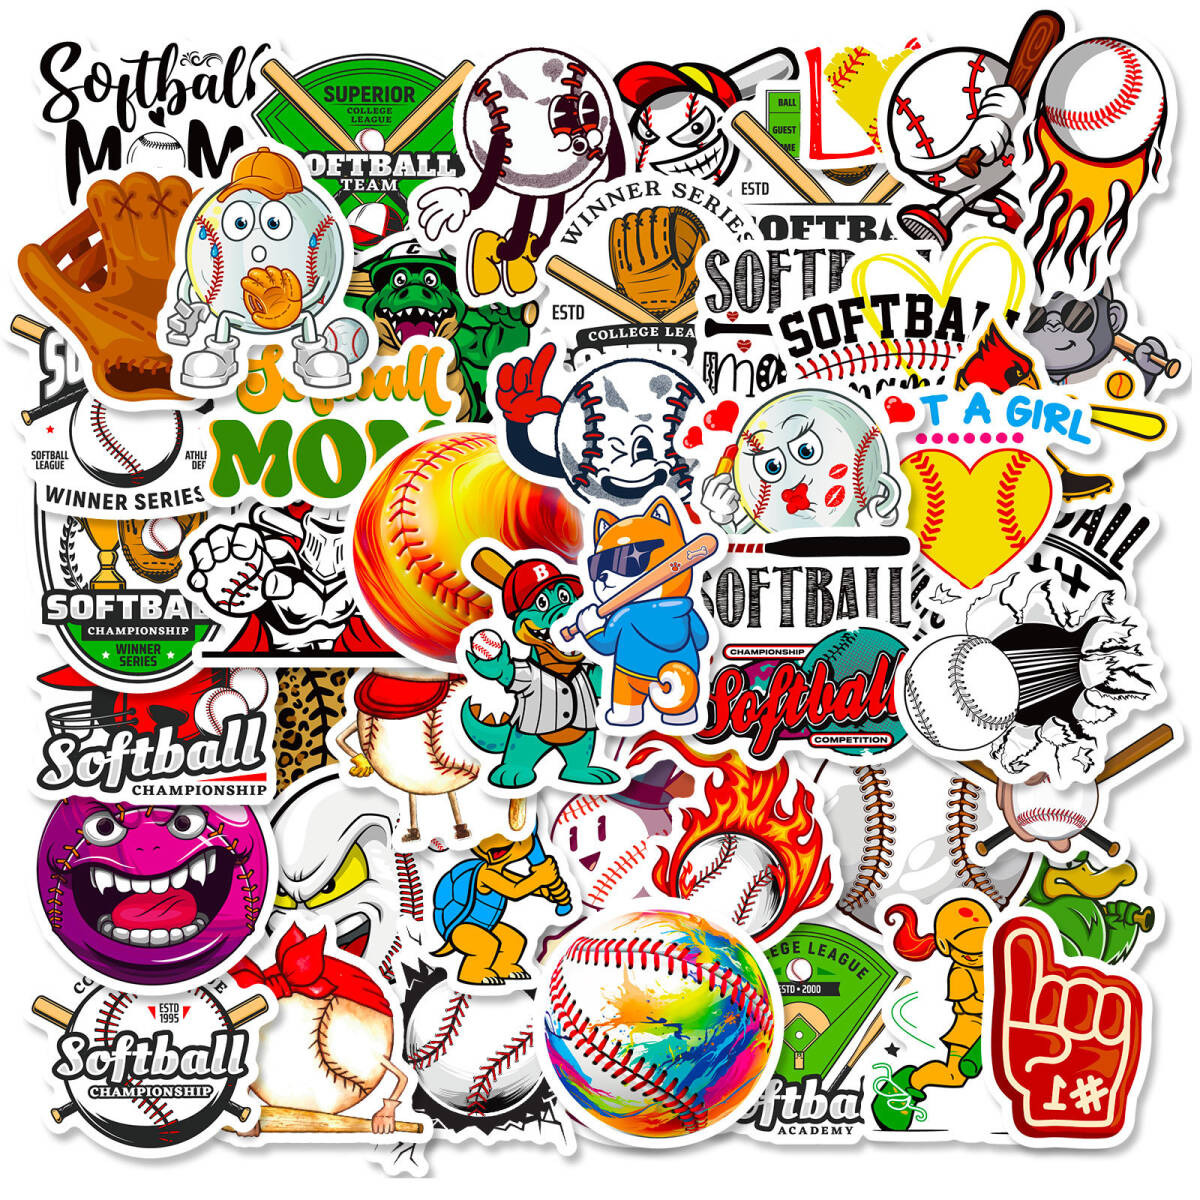  бейсбол софтбол softball для софтбола лампочка бейсбол Circle Koshien лампочка вид спорт наклейка стикер 50 листов BP